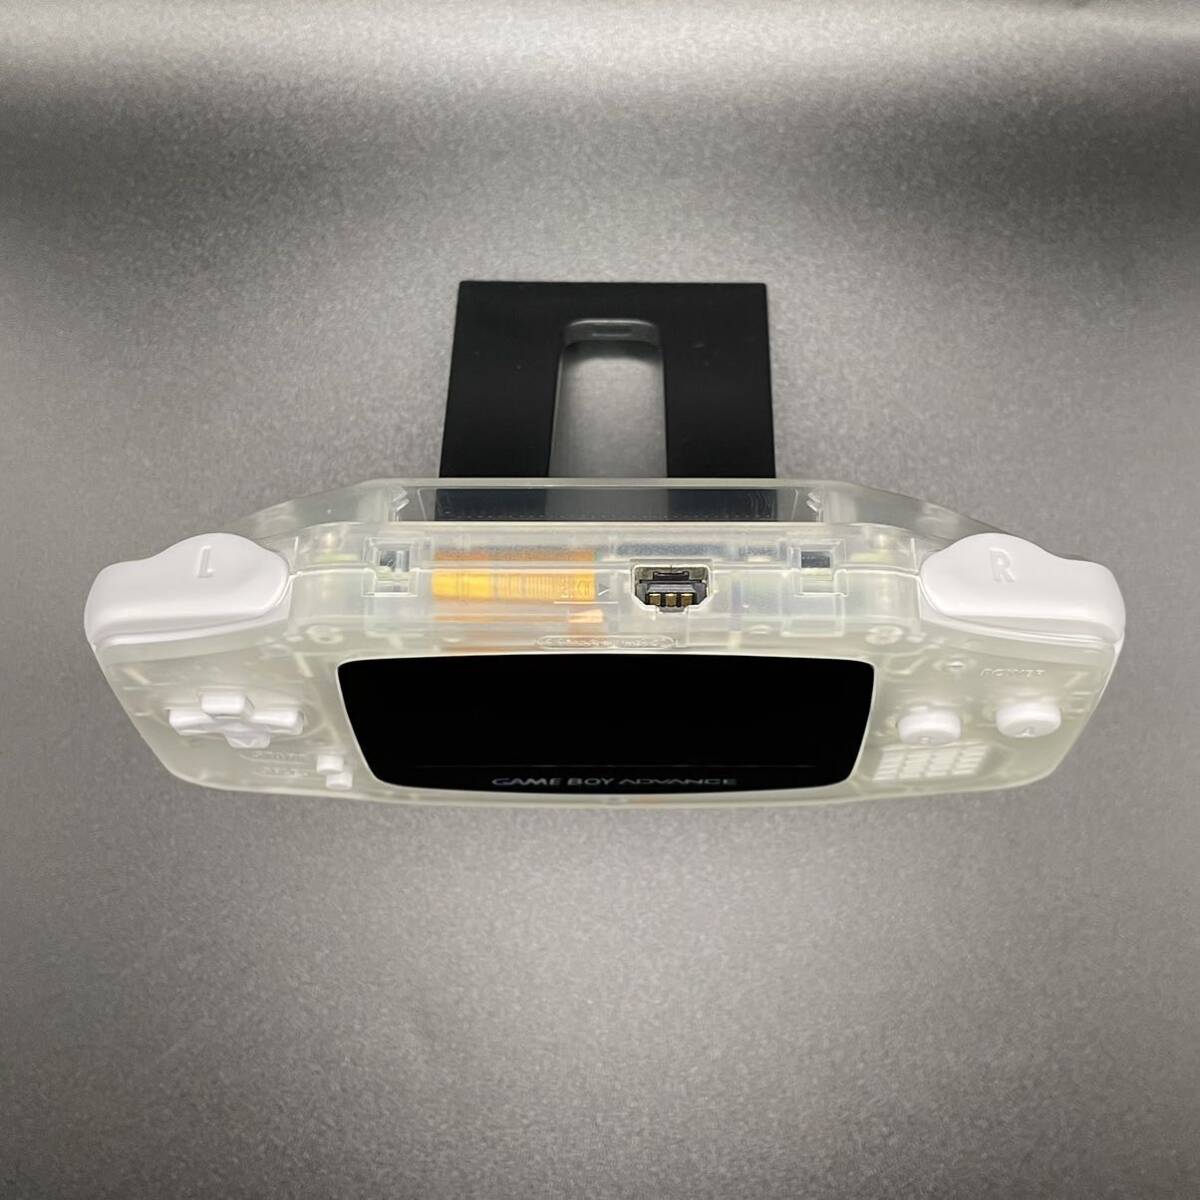  Game Boy Advance body IPS V7 backlight liquid crystal installing 061